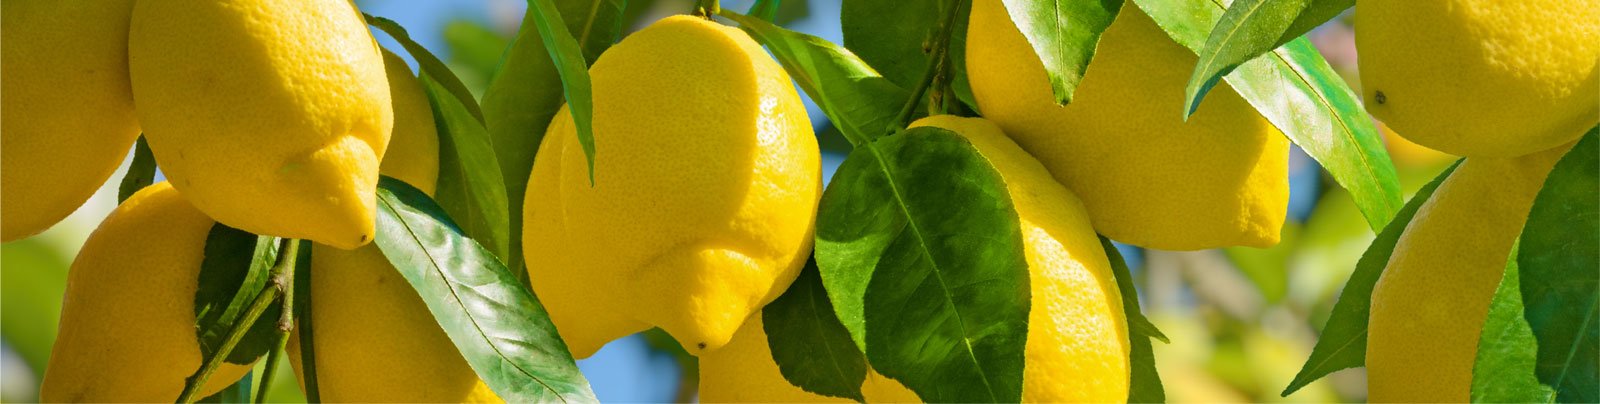 metapwr-gum-ingredient-lemon.jpg